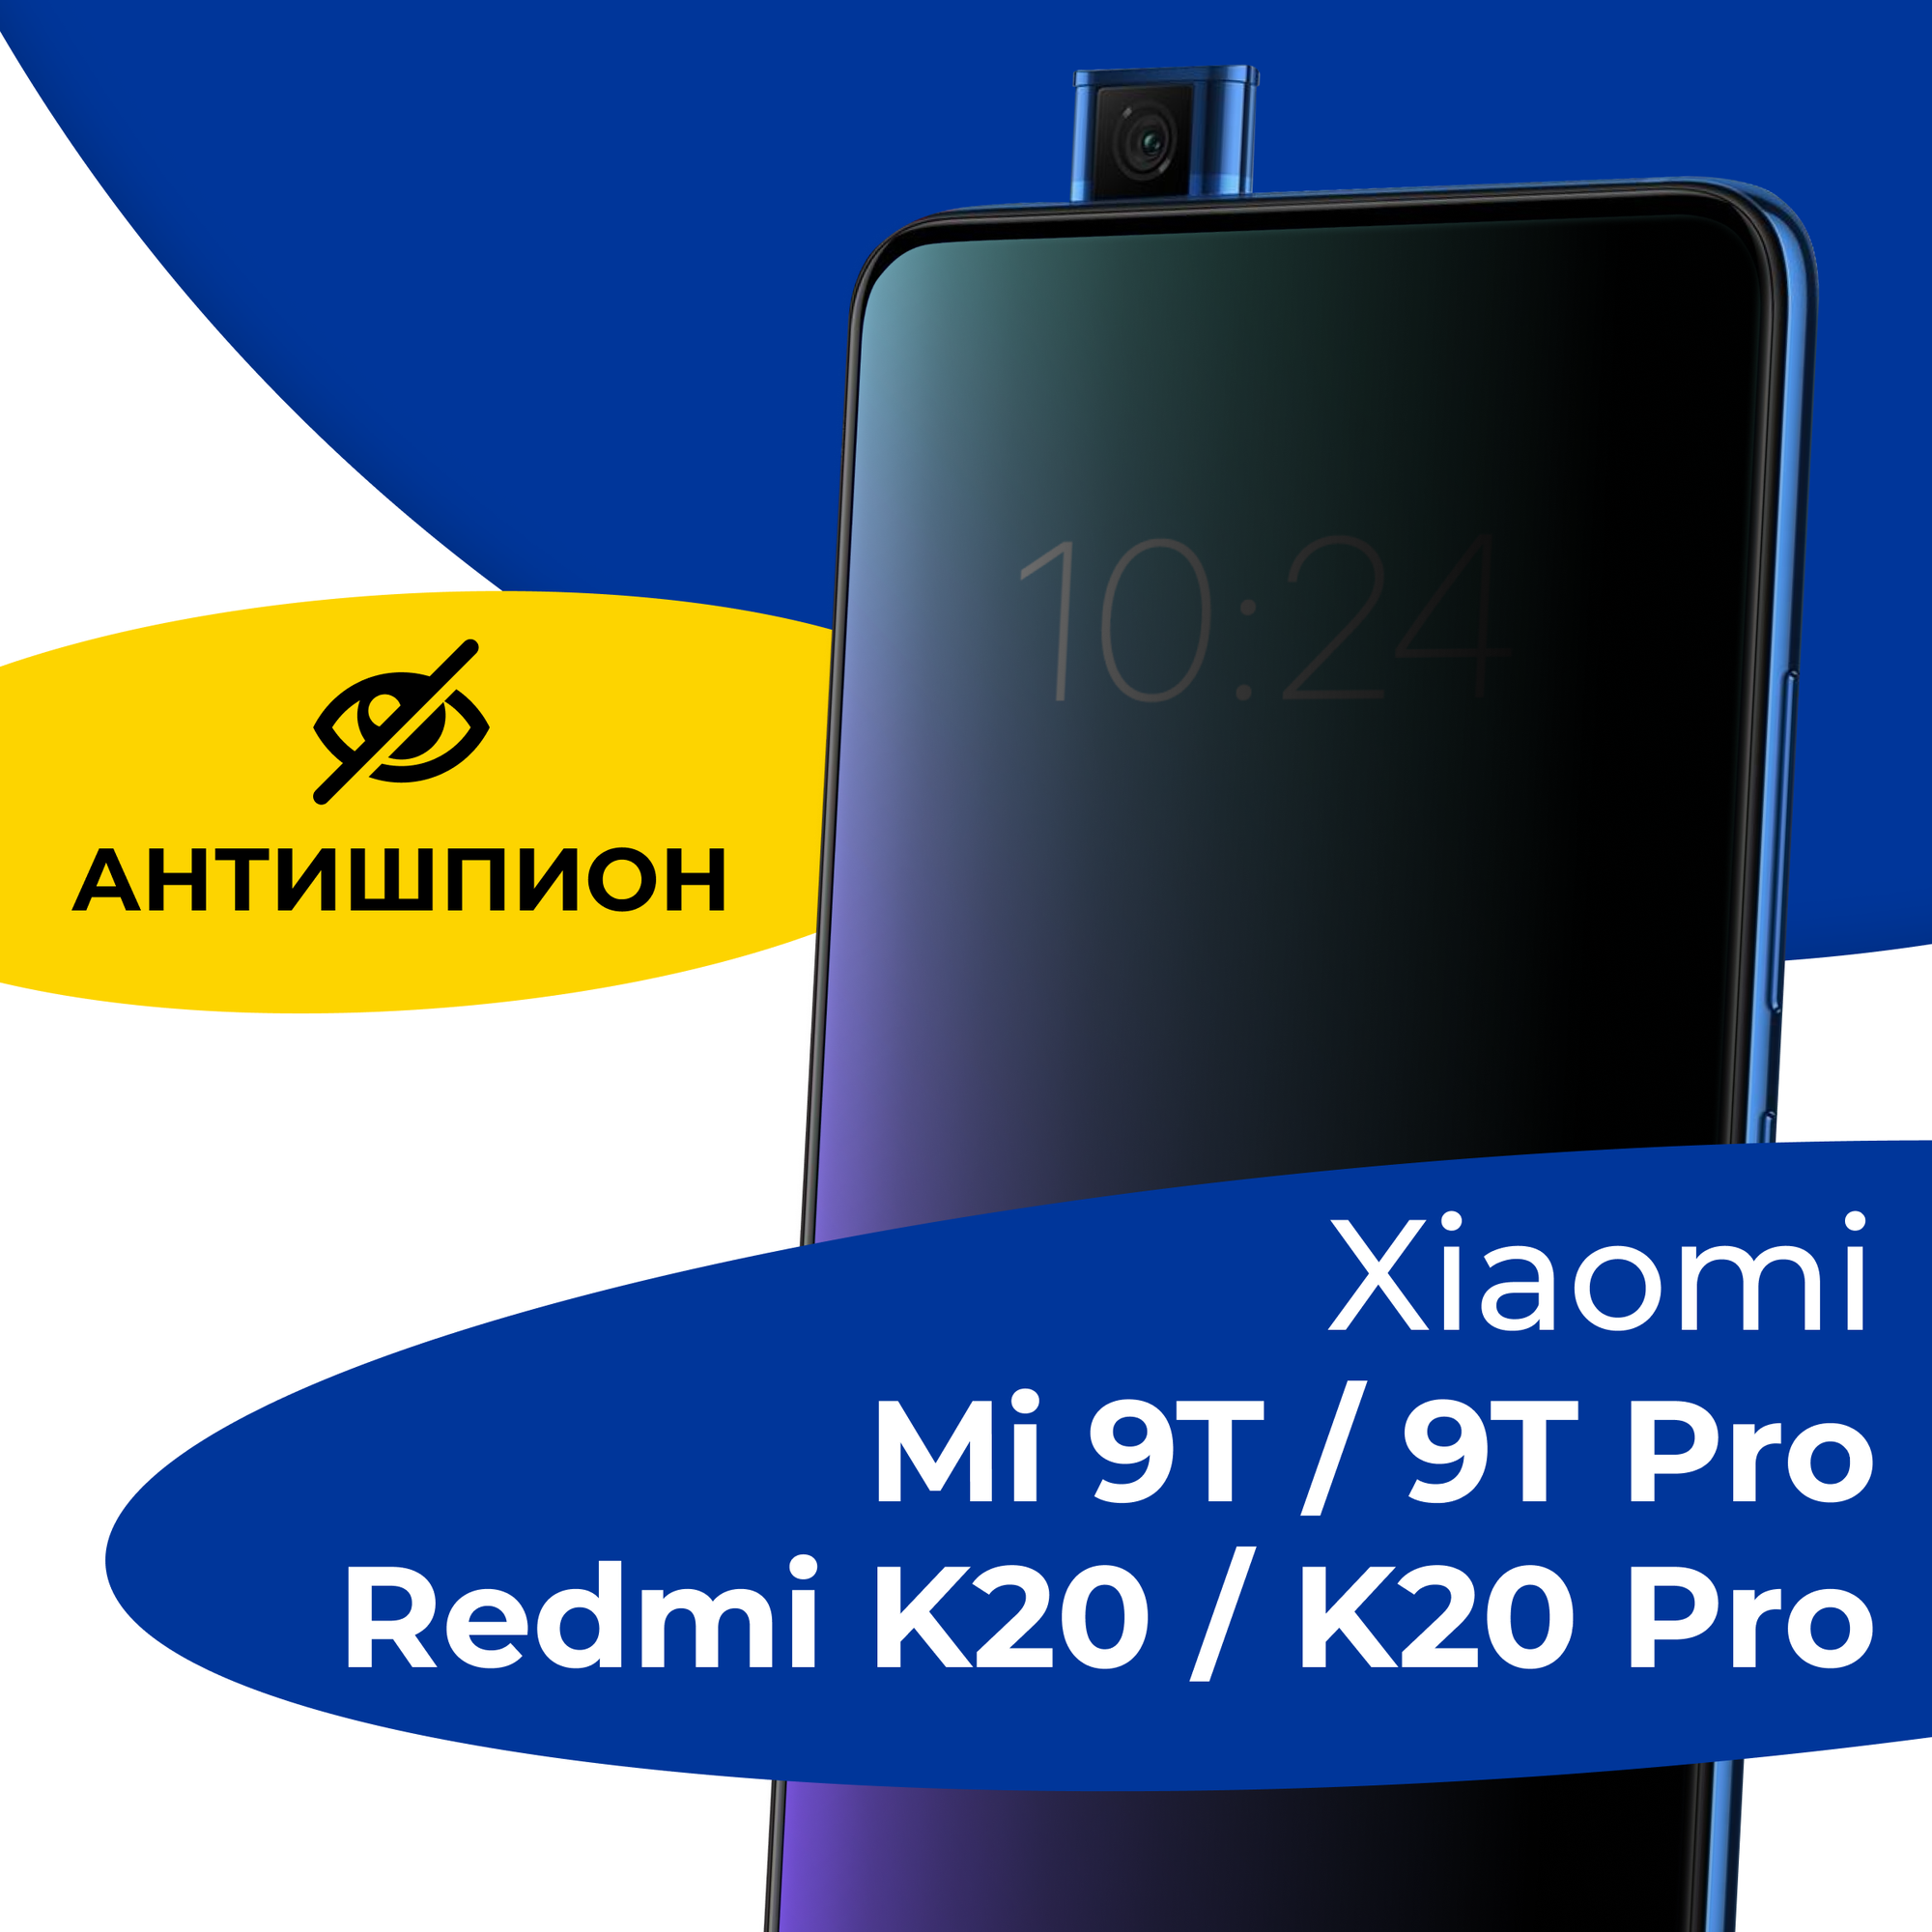 Защитное стекло Антишпион на телефон Xiaomi Mi 9T Mi 9T Pro Redmi K20 Redmi K20 Pro / Стекло для Сяоми Ми 9Т Ми 9Т Про Редми К20 Редми К20 Про